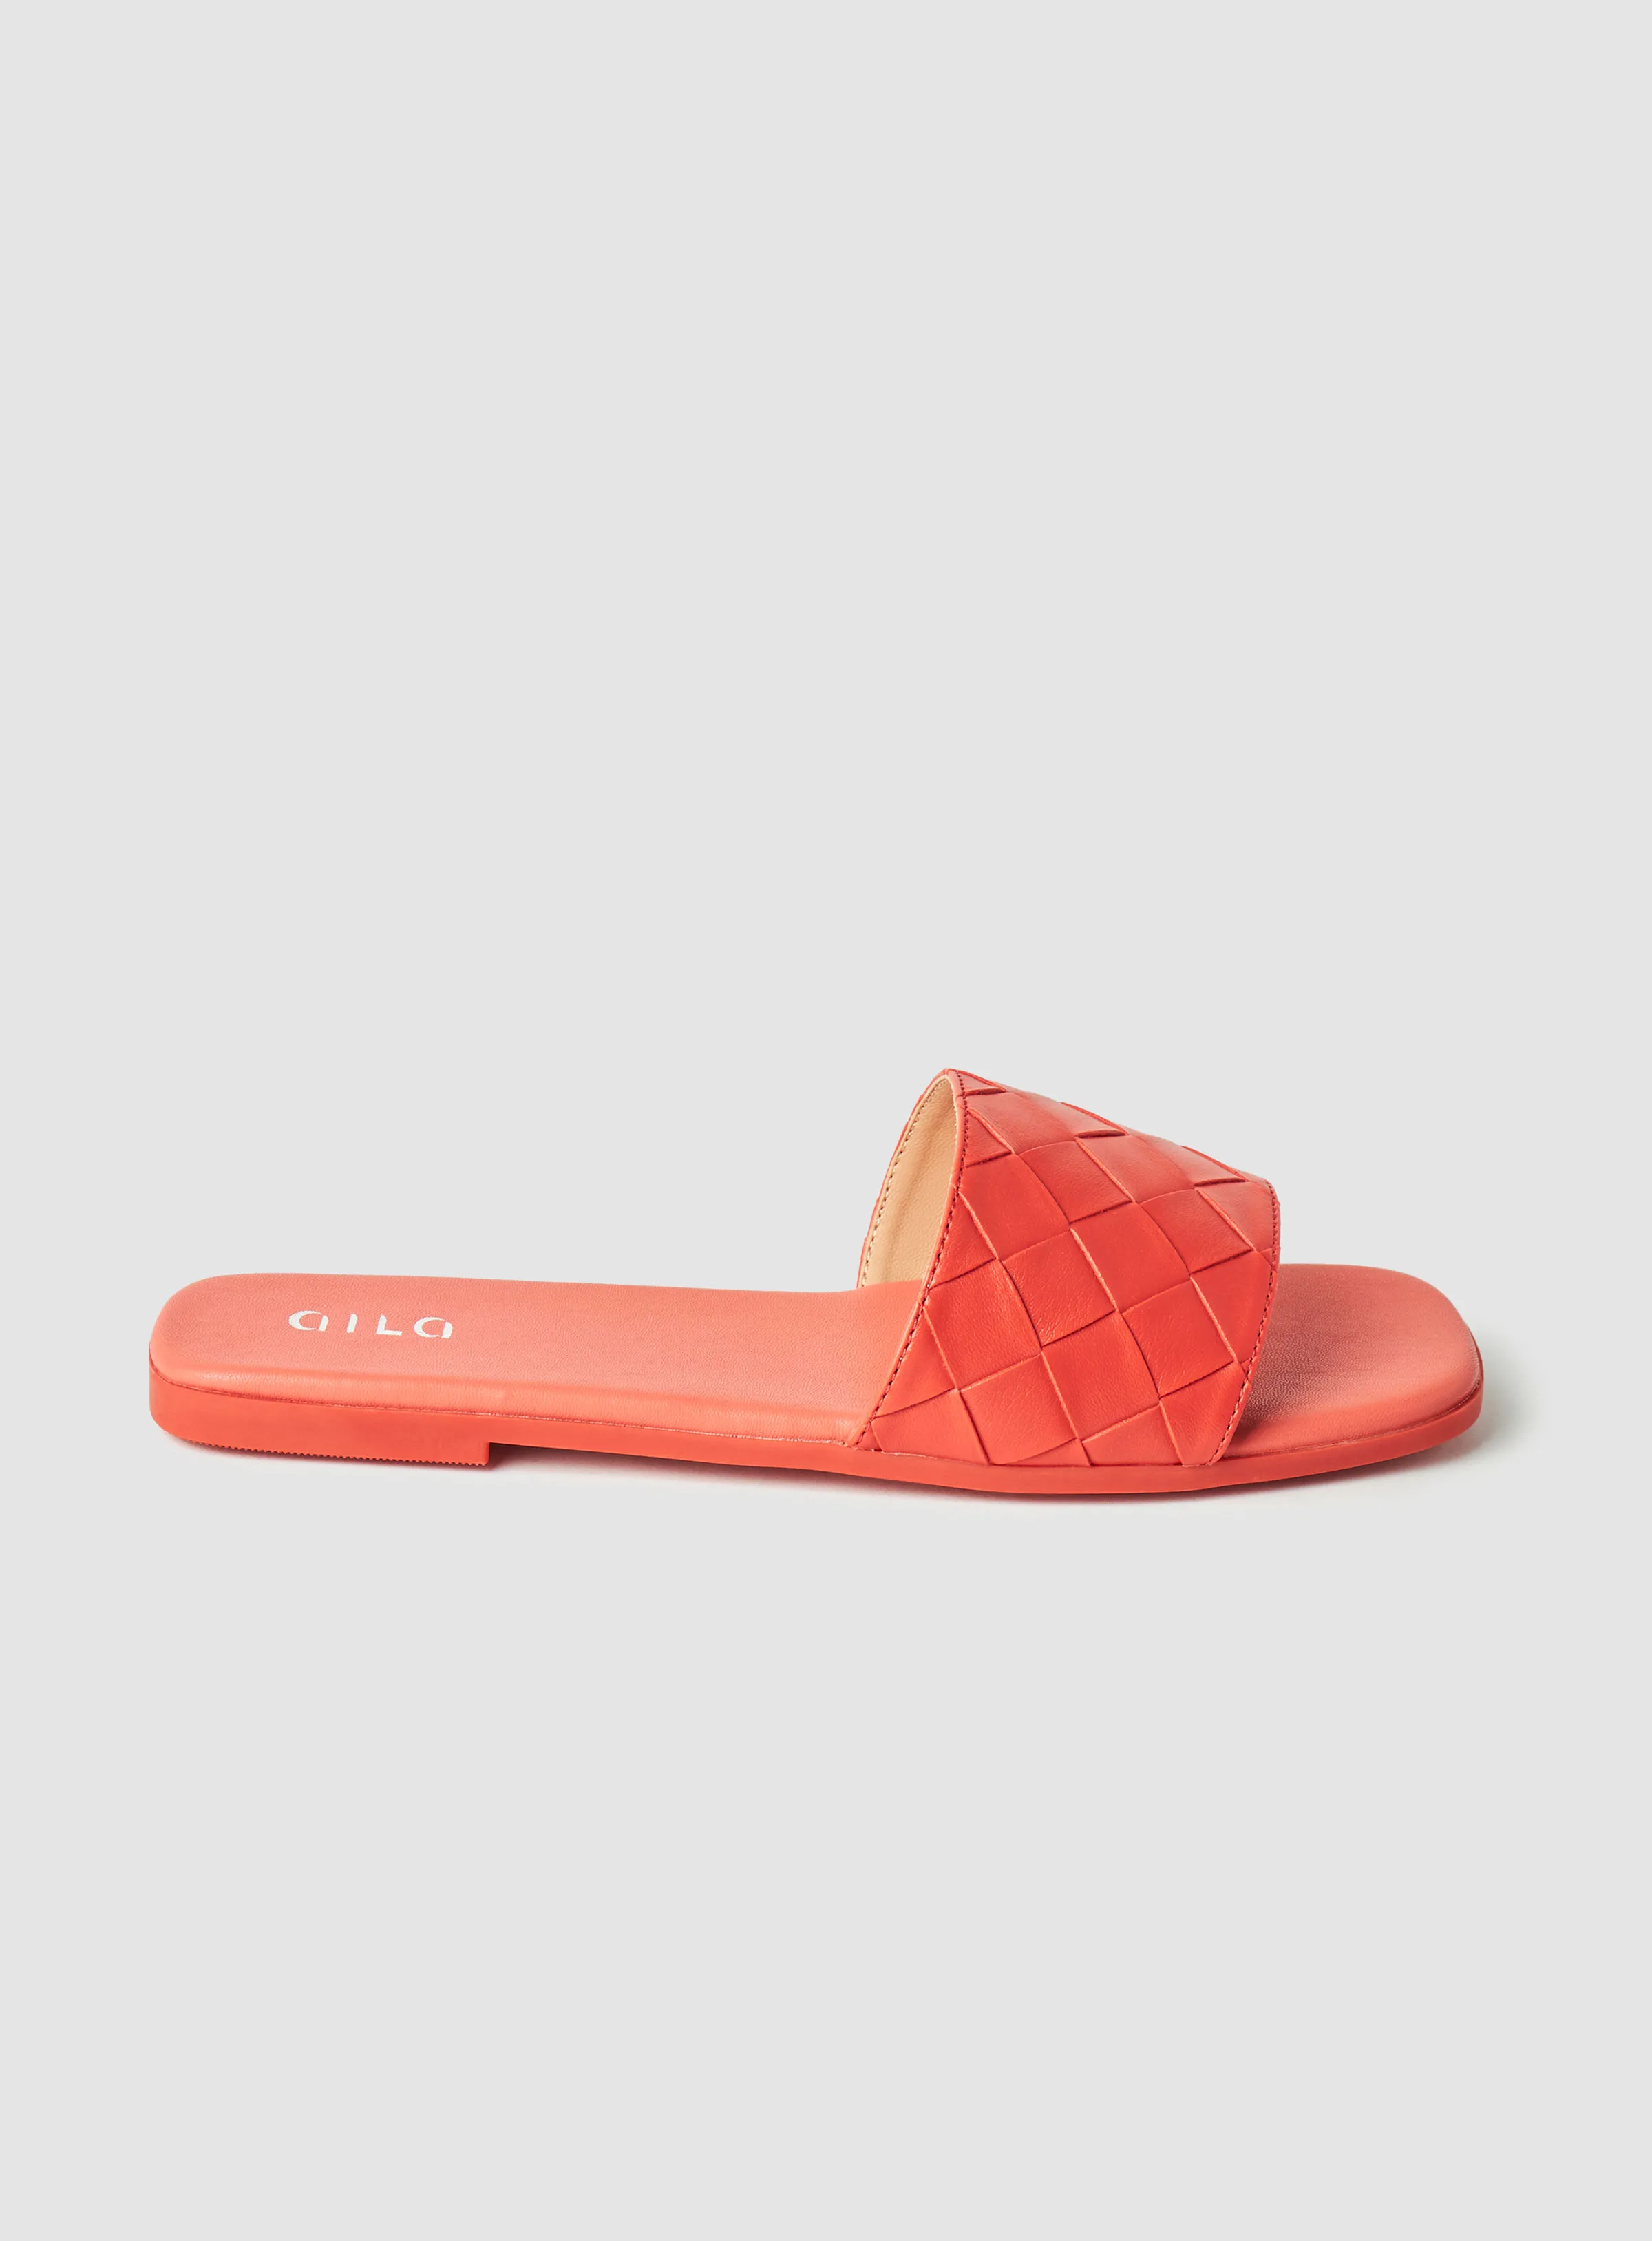 Aila Casual Flat Sandals Pink